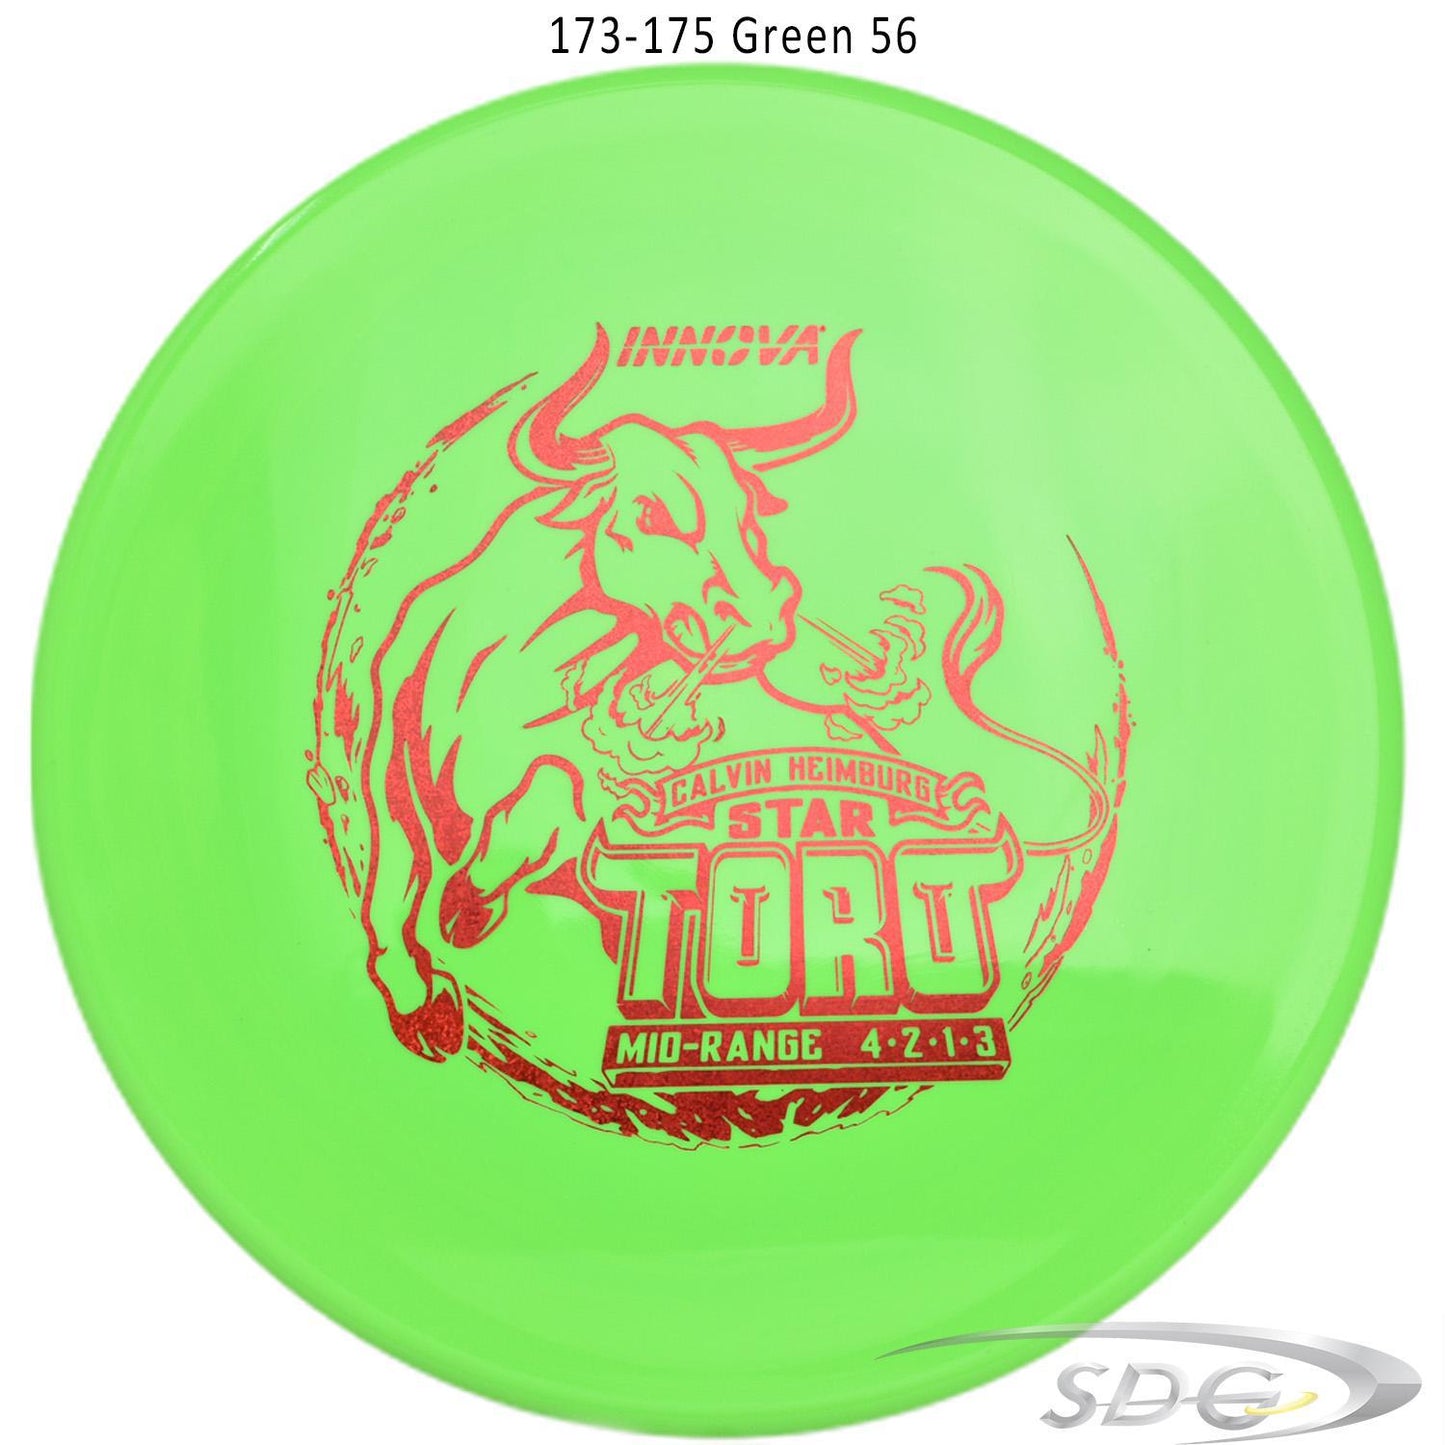 innova-star-toro-calvin-heimburg-signature-disc-golf-mid-range 173-175 Green 56 